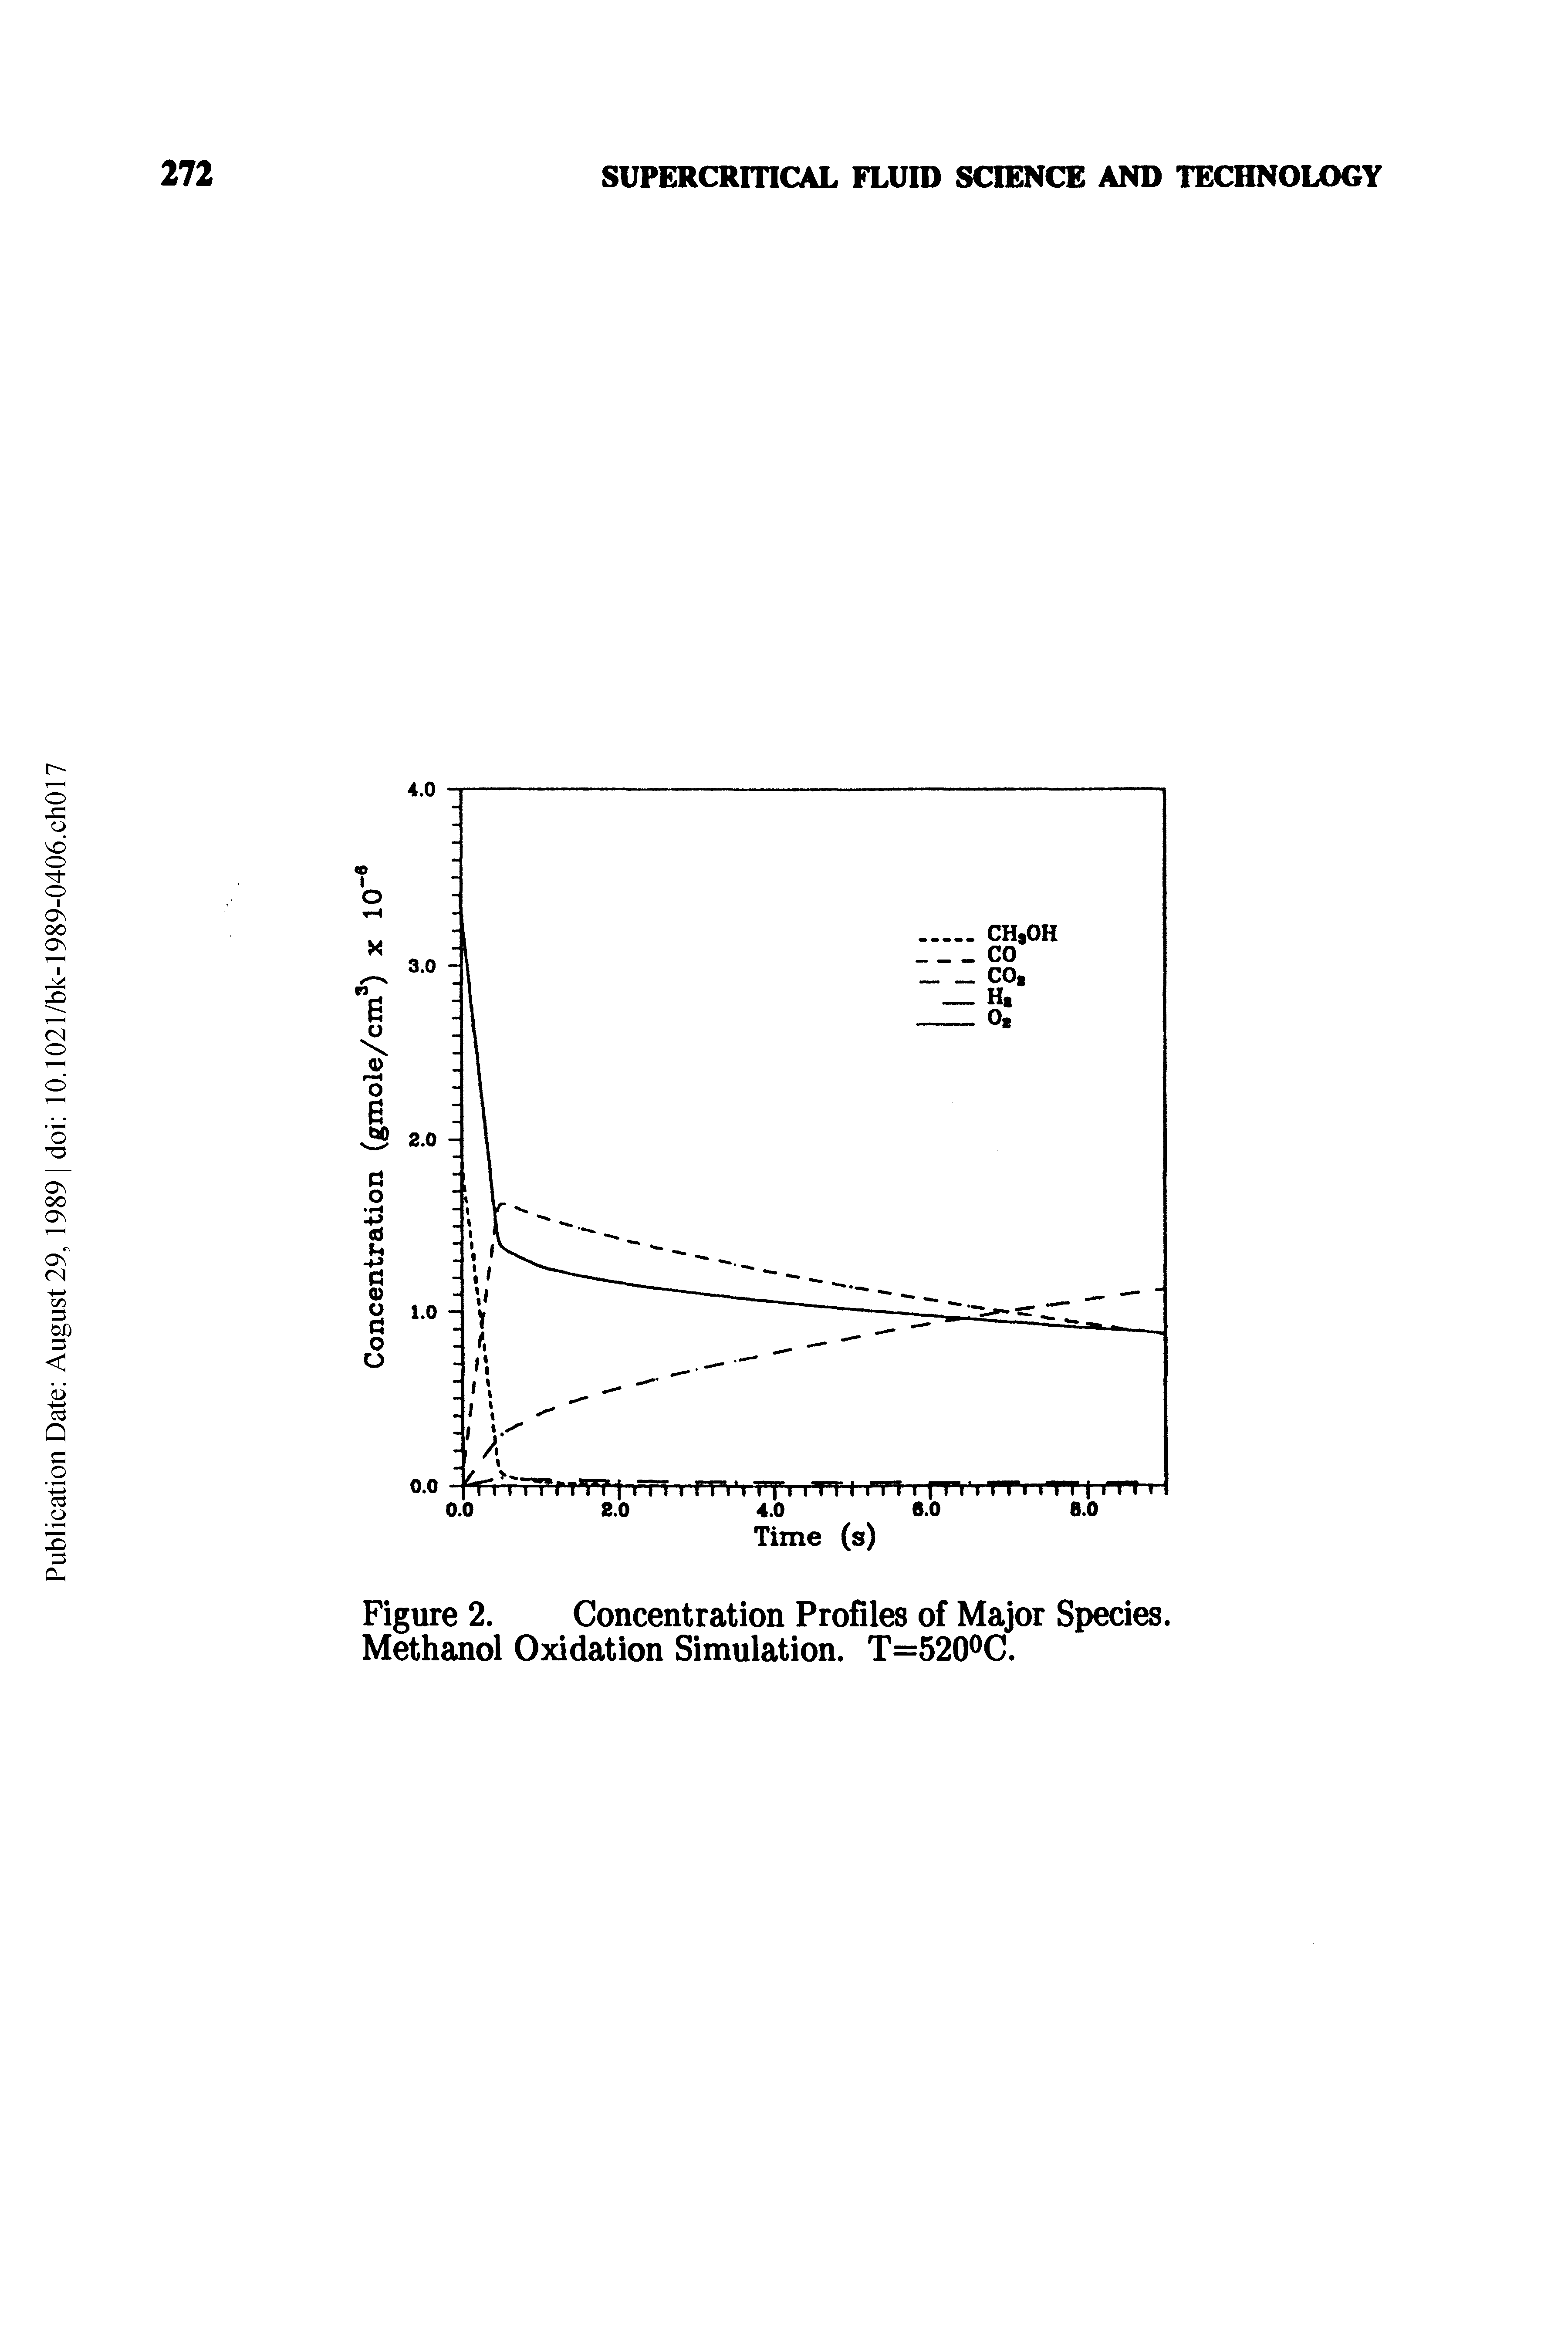 Figure 2. Concentration Profiles of Major Species. Methanol Oxidation Simulation. T=520<>C.